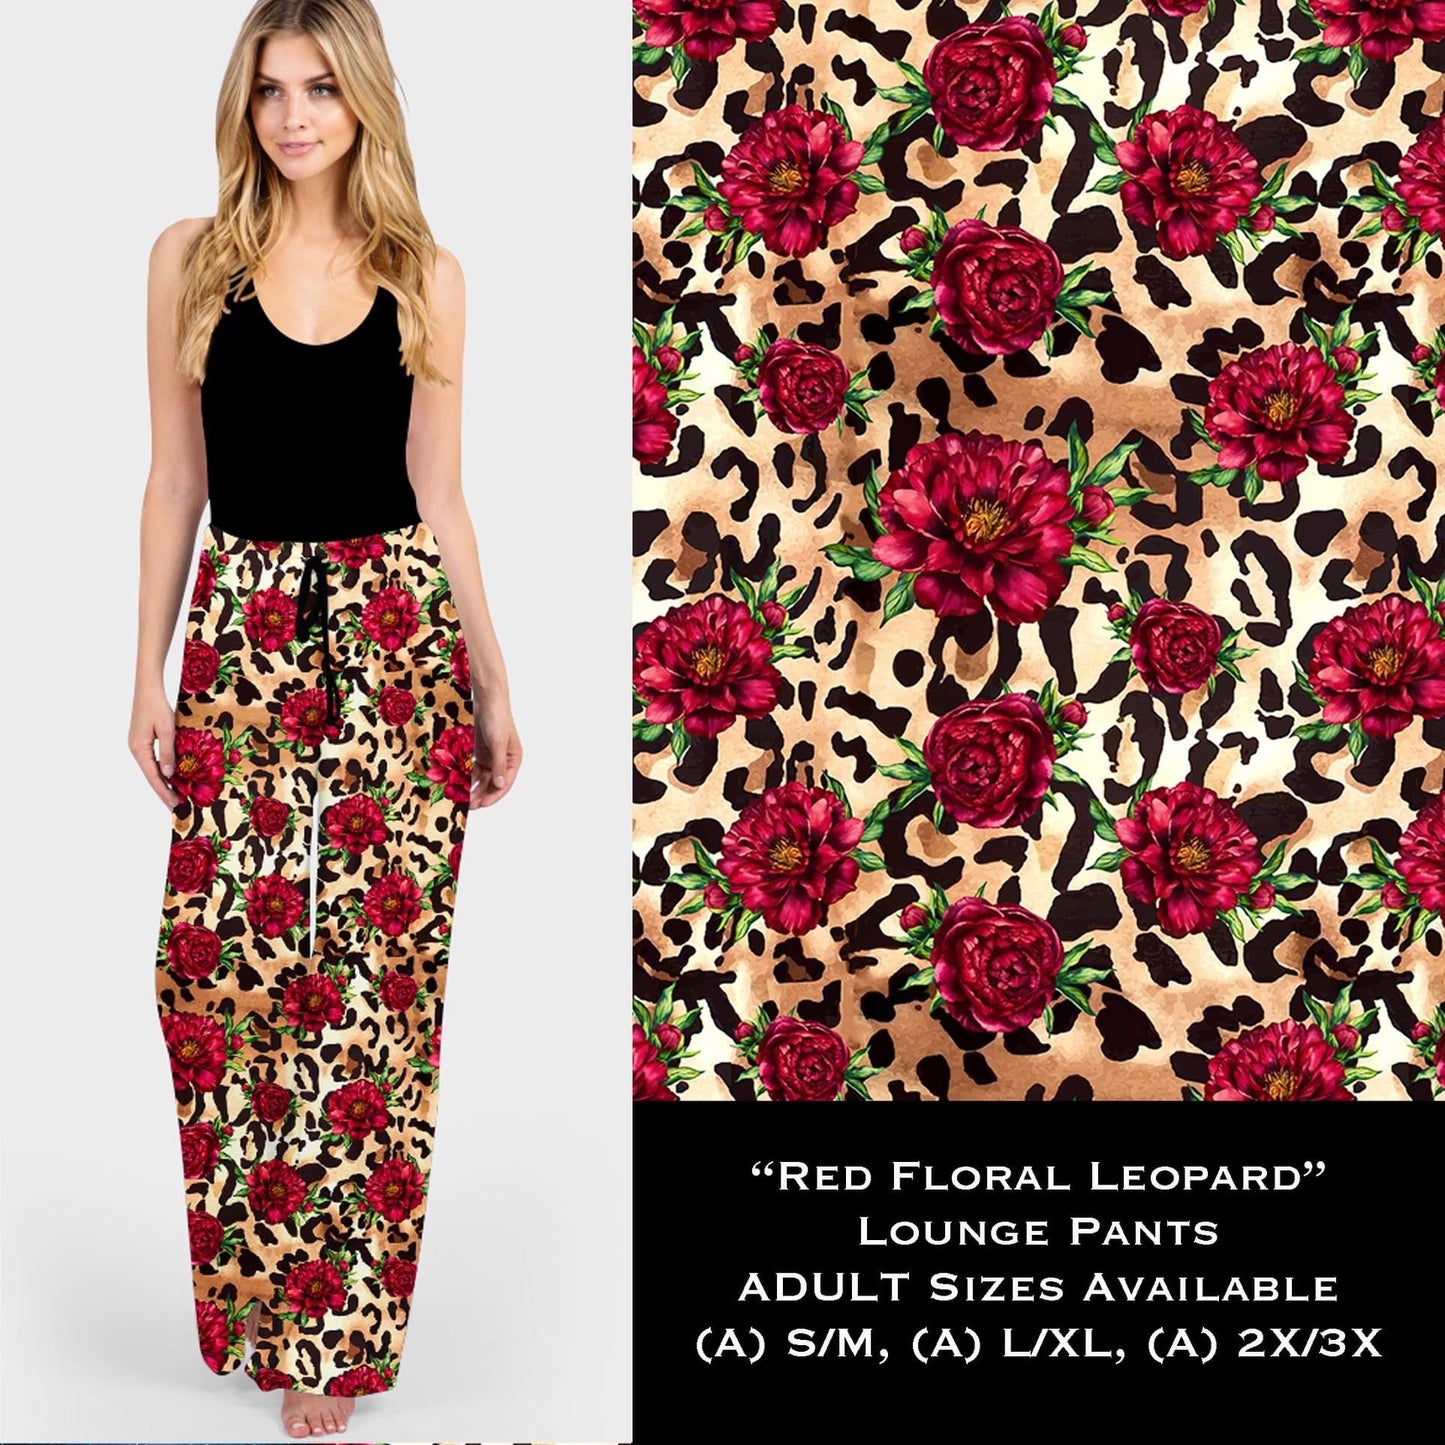 Red Floral Leopard - Lounge Pants